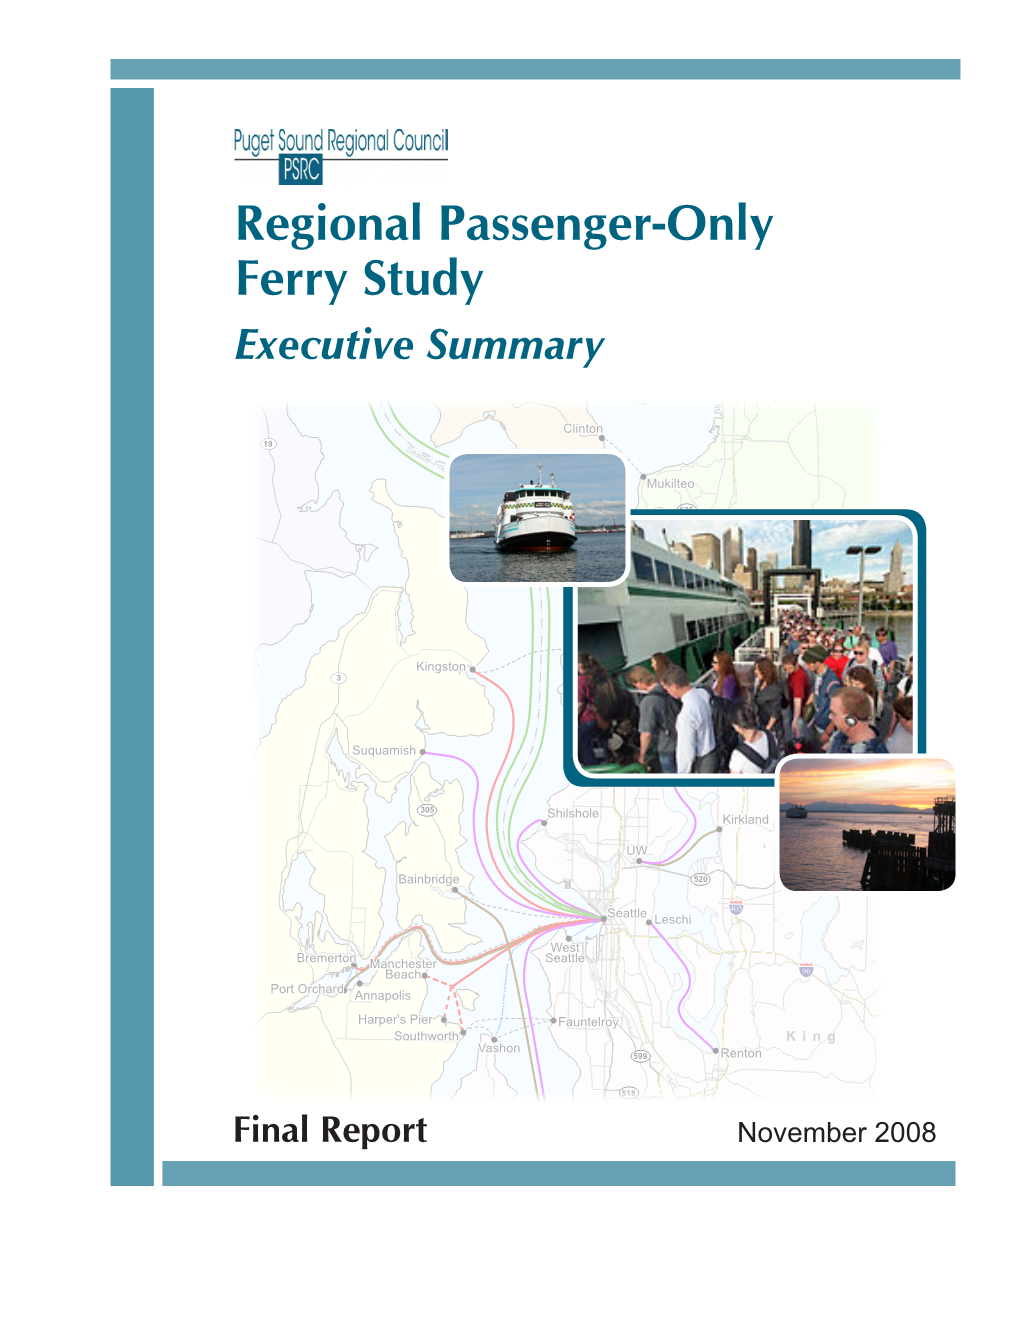 2008 Regional Passenger-Only Ferry Study